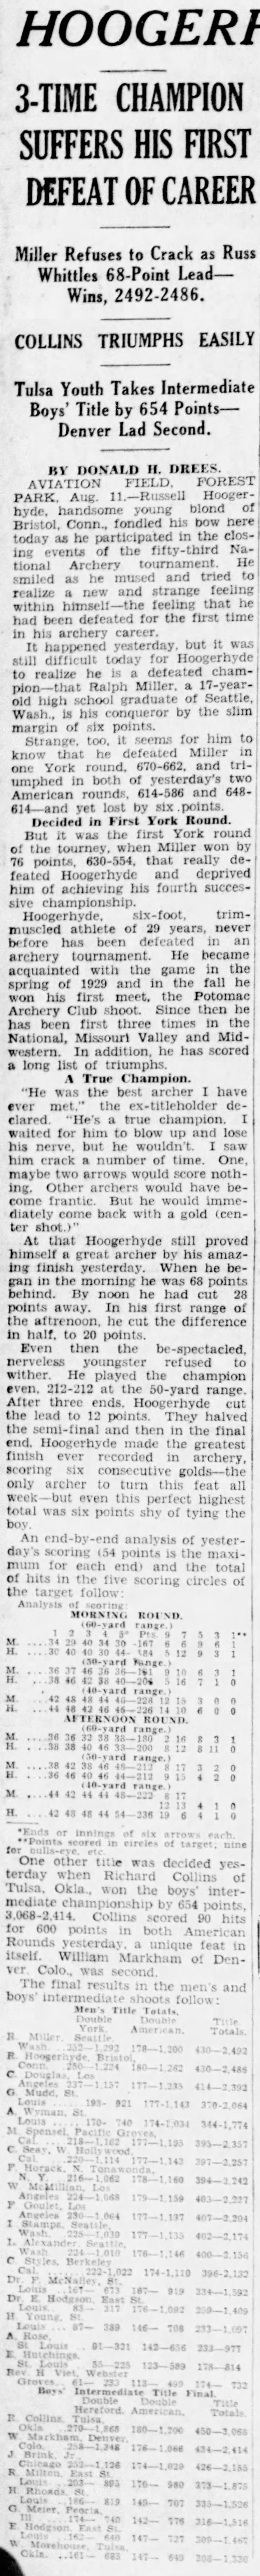 Hoogerhyde Loses U.S. Archery Title To Boy By Six Points